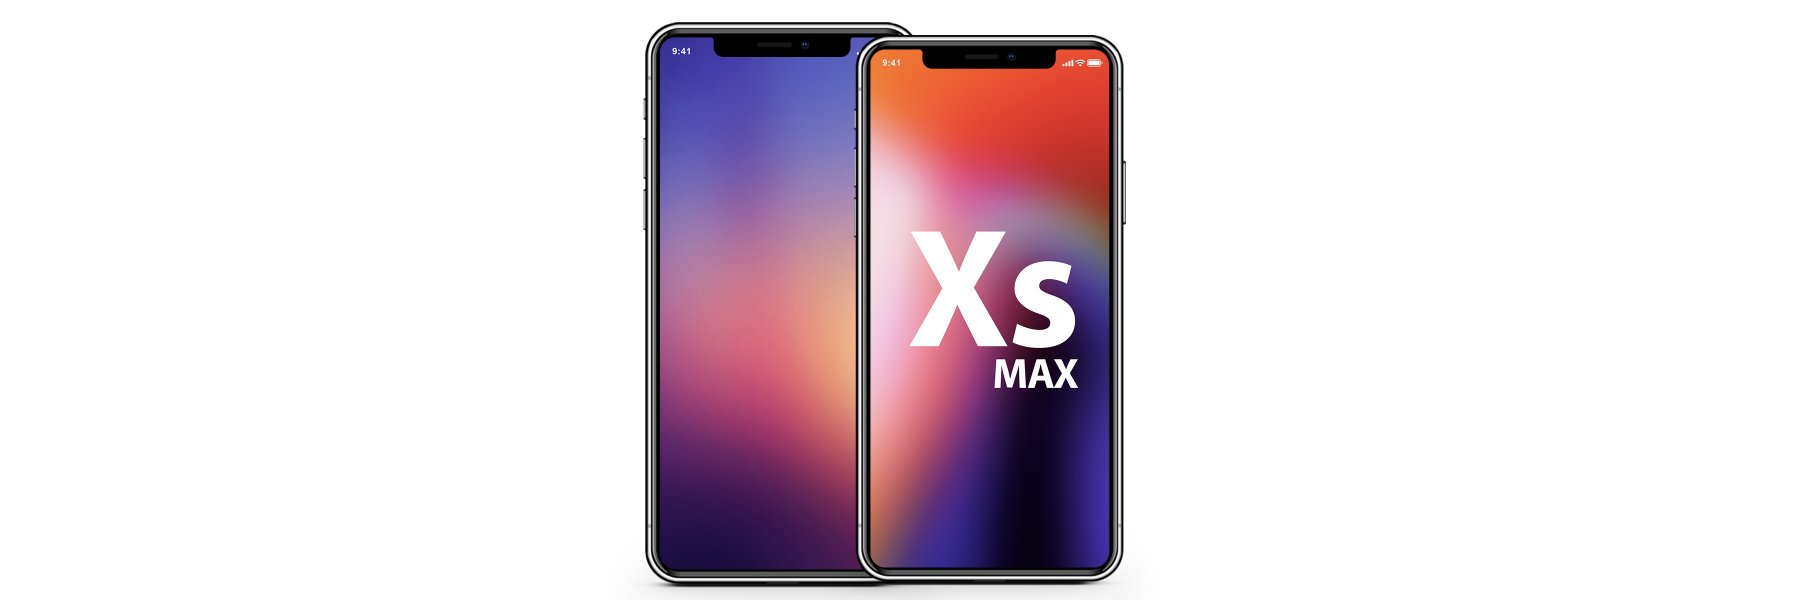 iPhone Xs Max Displays